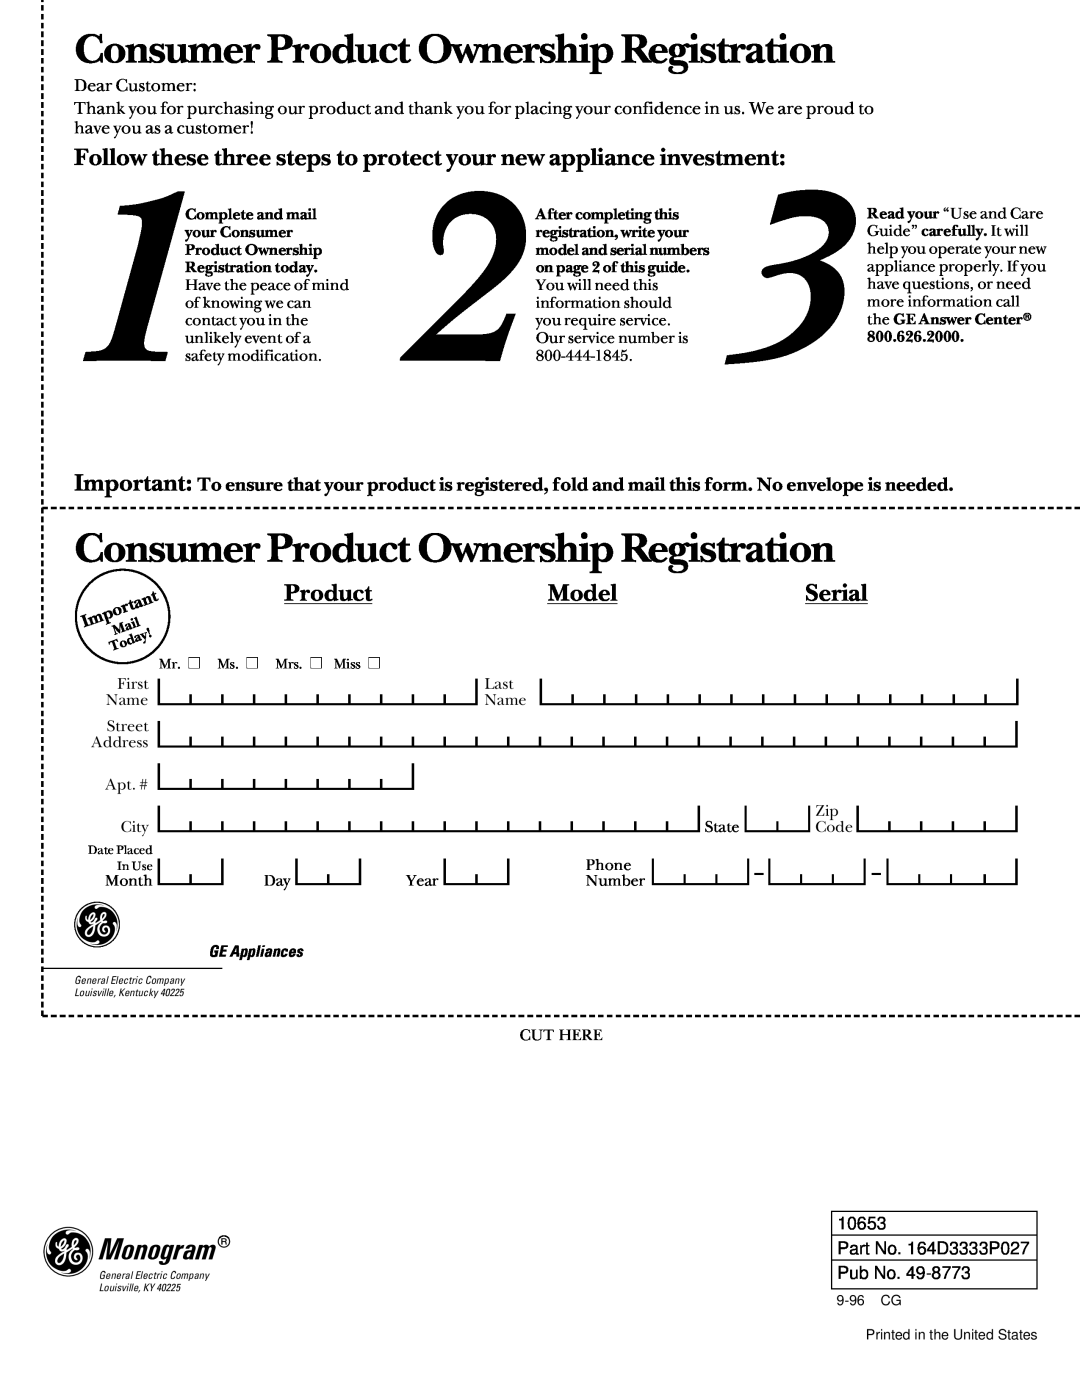 GE Monogram Consumer Product Ownership Registration, ModelSerial, Monogram, Part No. 164D3333P027 Pub No, GE Appliances 